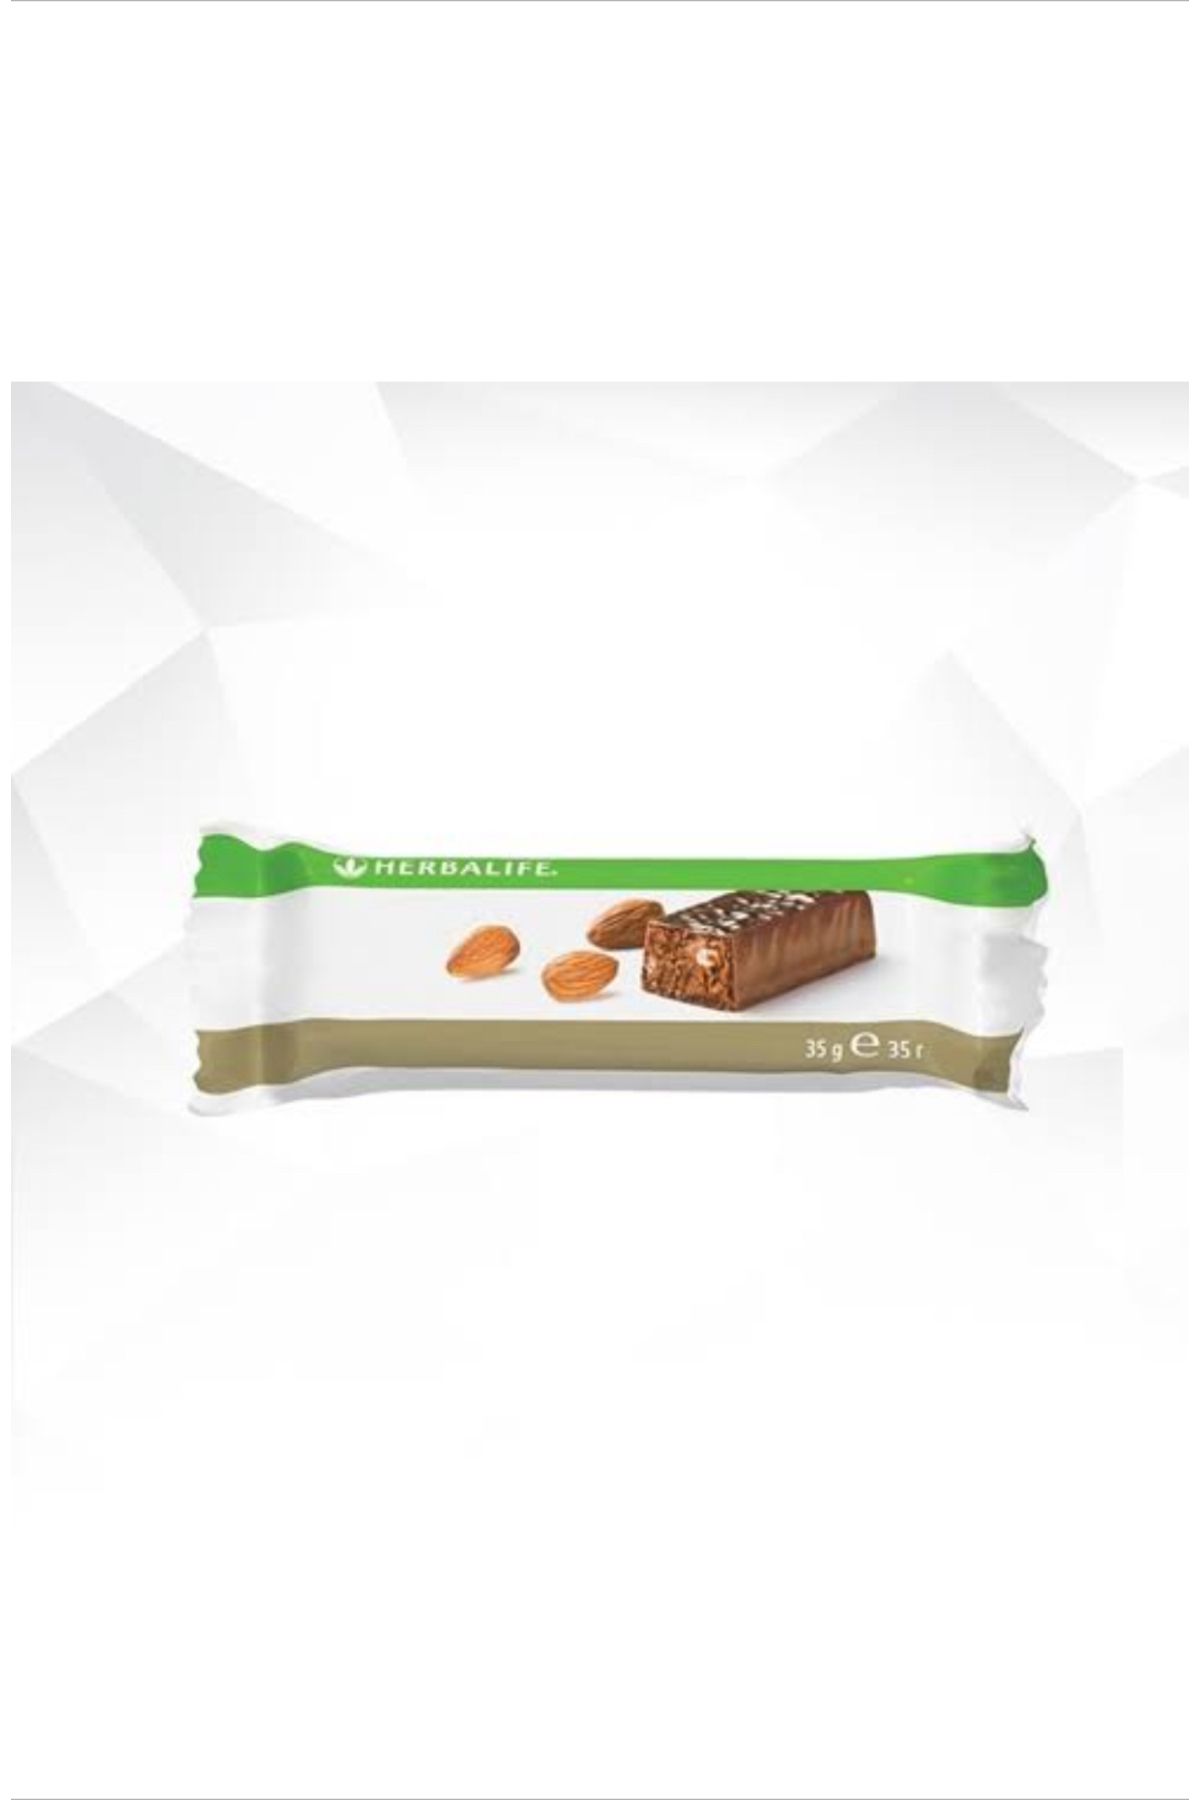 Herbalife Protein Bar Çikolata Bademli (35G) (1 ADET)